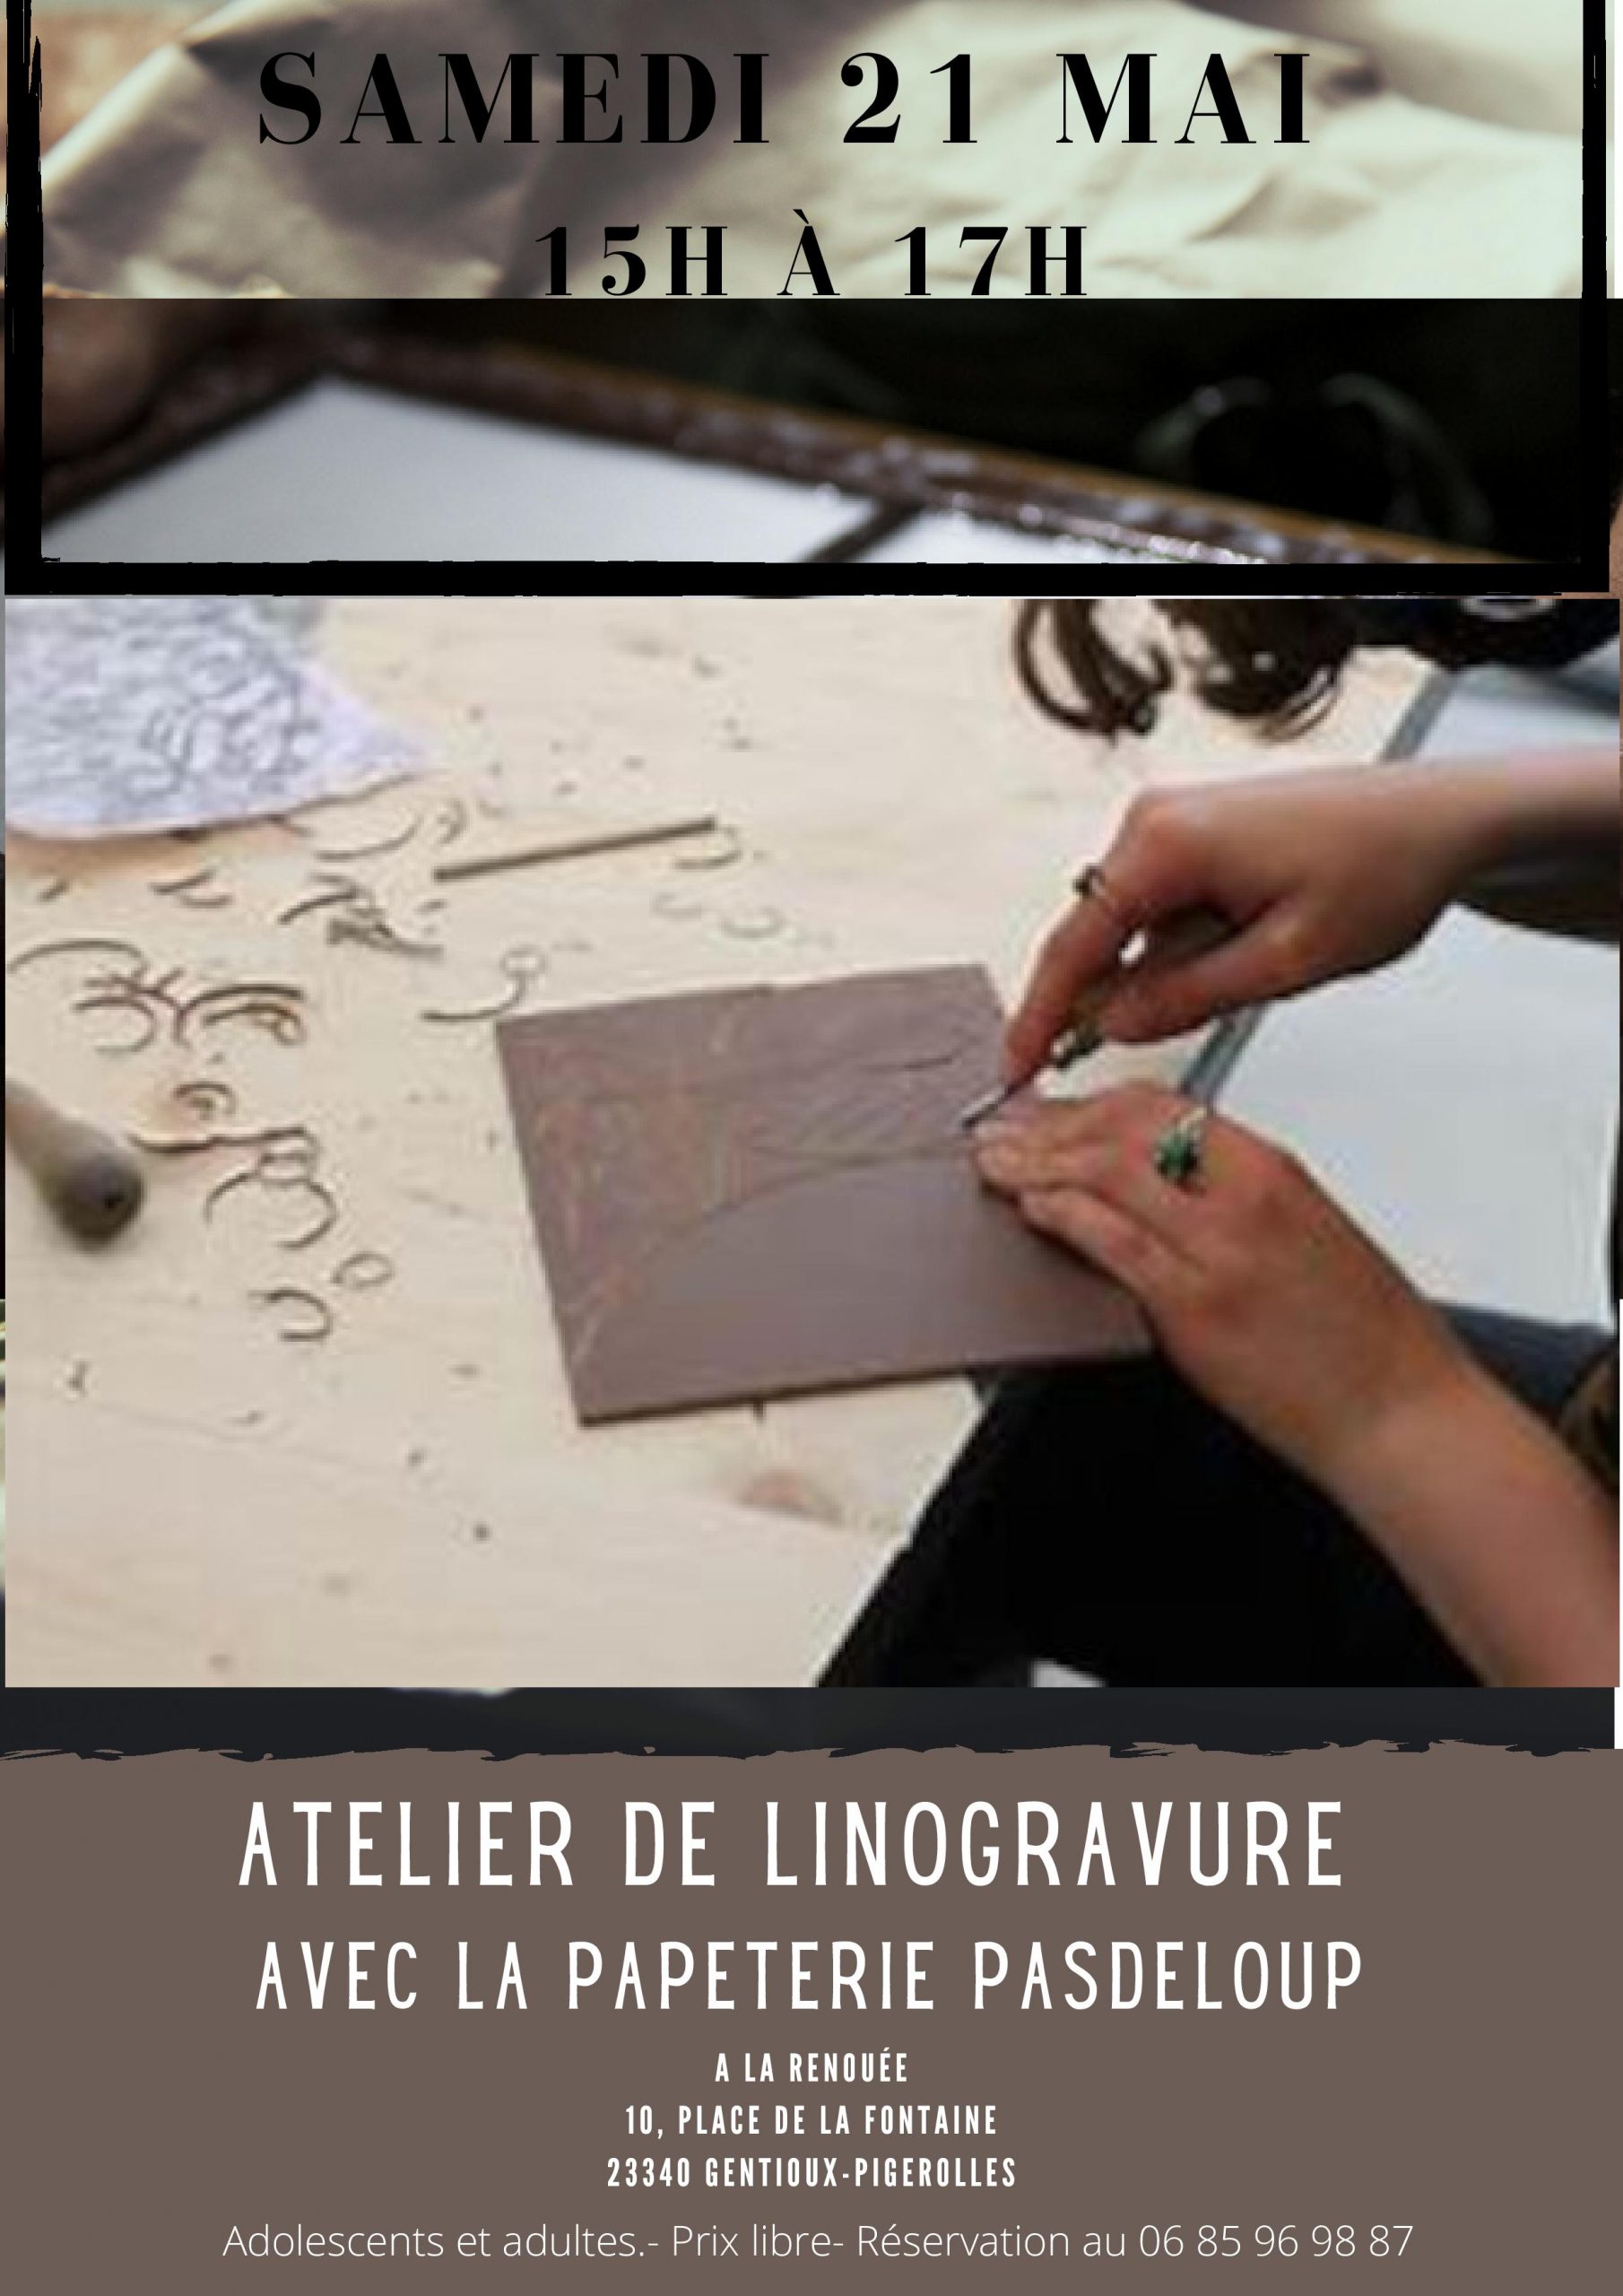 Samedi 21 mai Atelier Linogravure avec la papeterie Pasdeloup